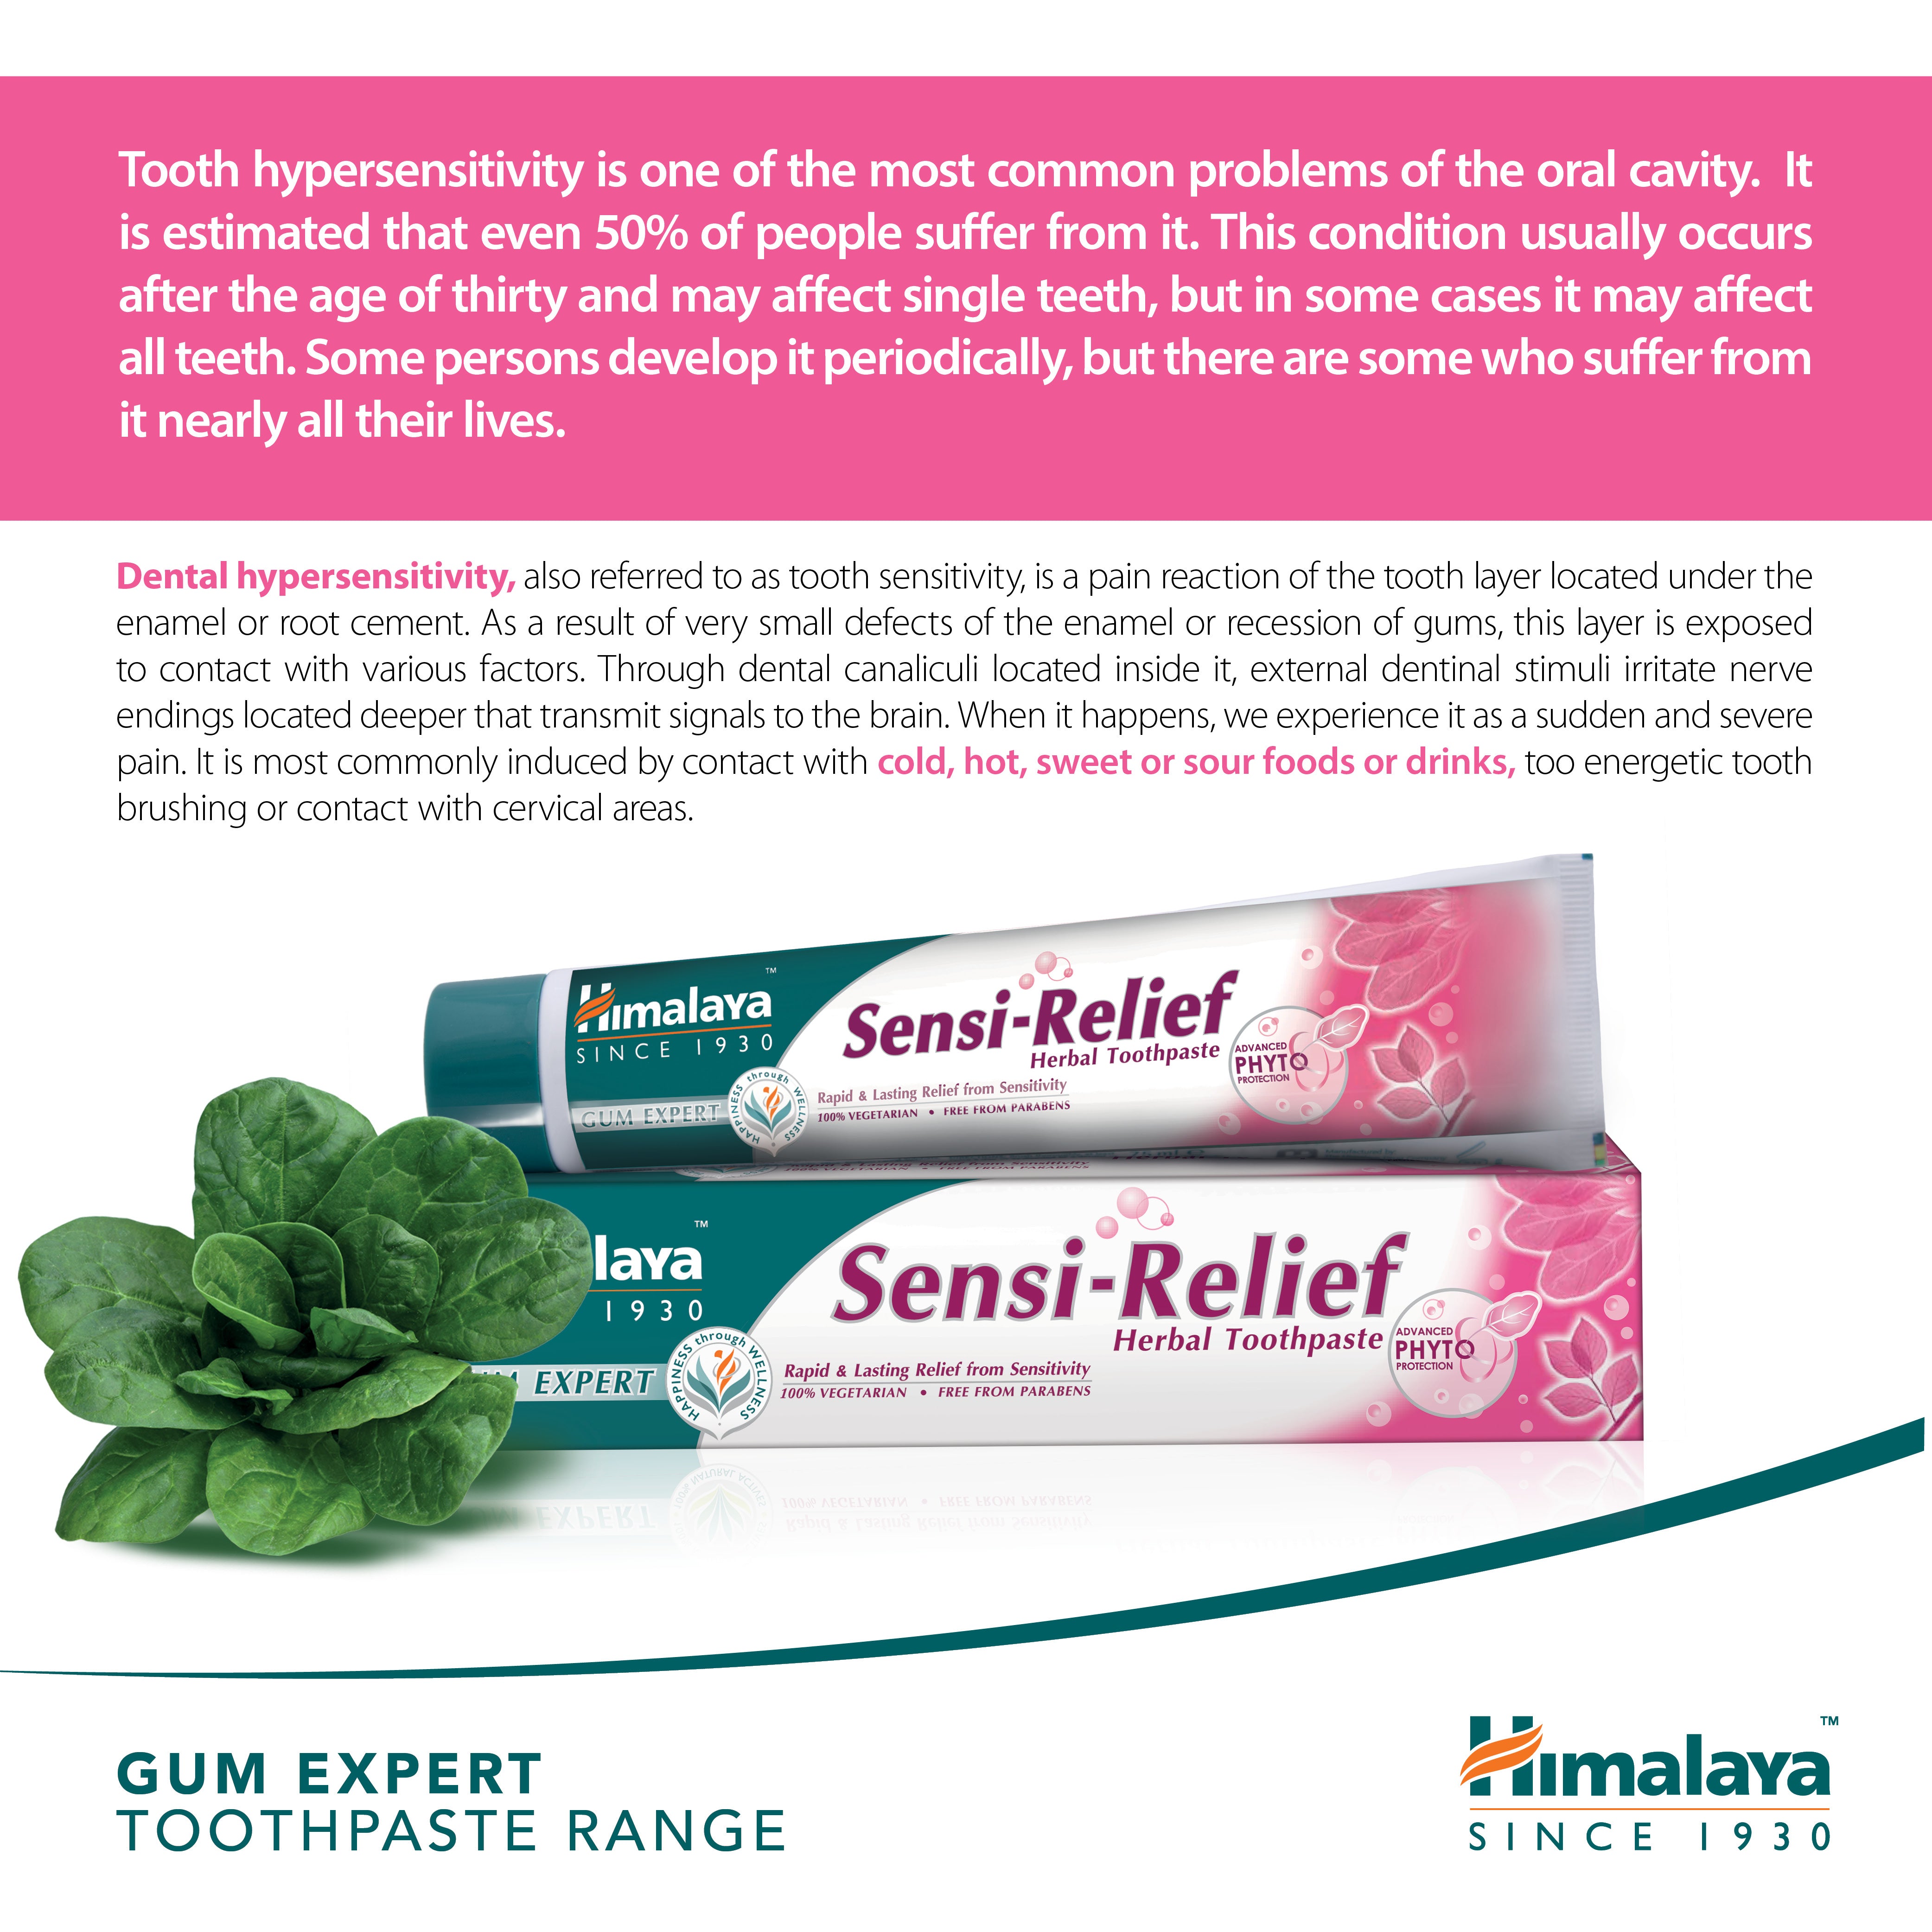 Himalaya Gum Expert Herbal Toothpaste - Sensi Relief - 75ml